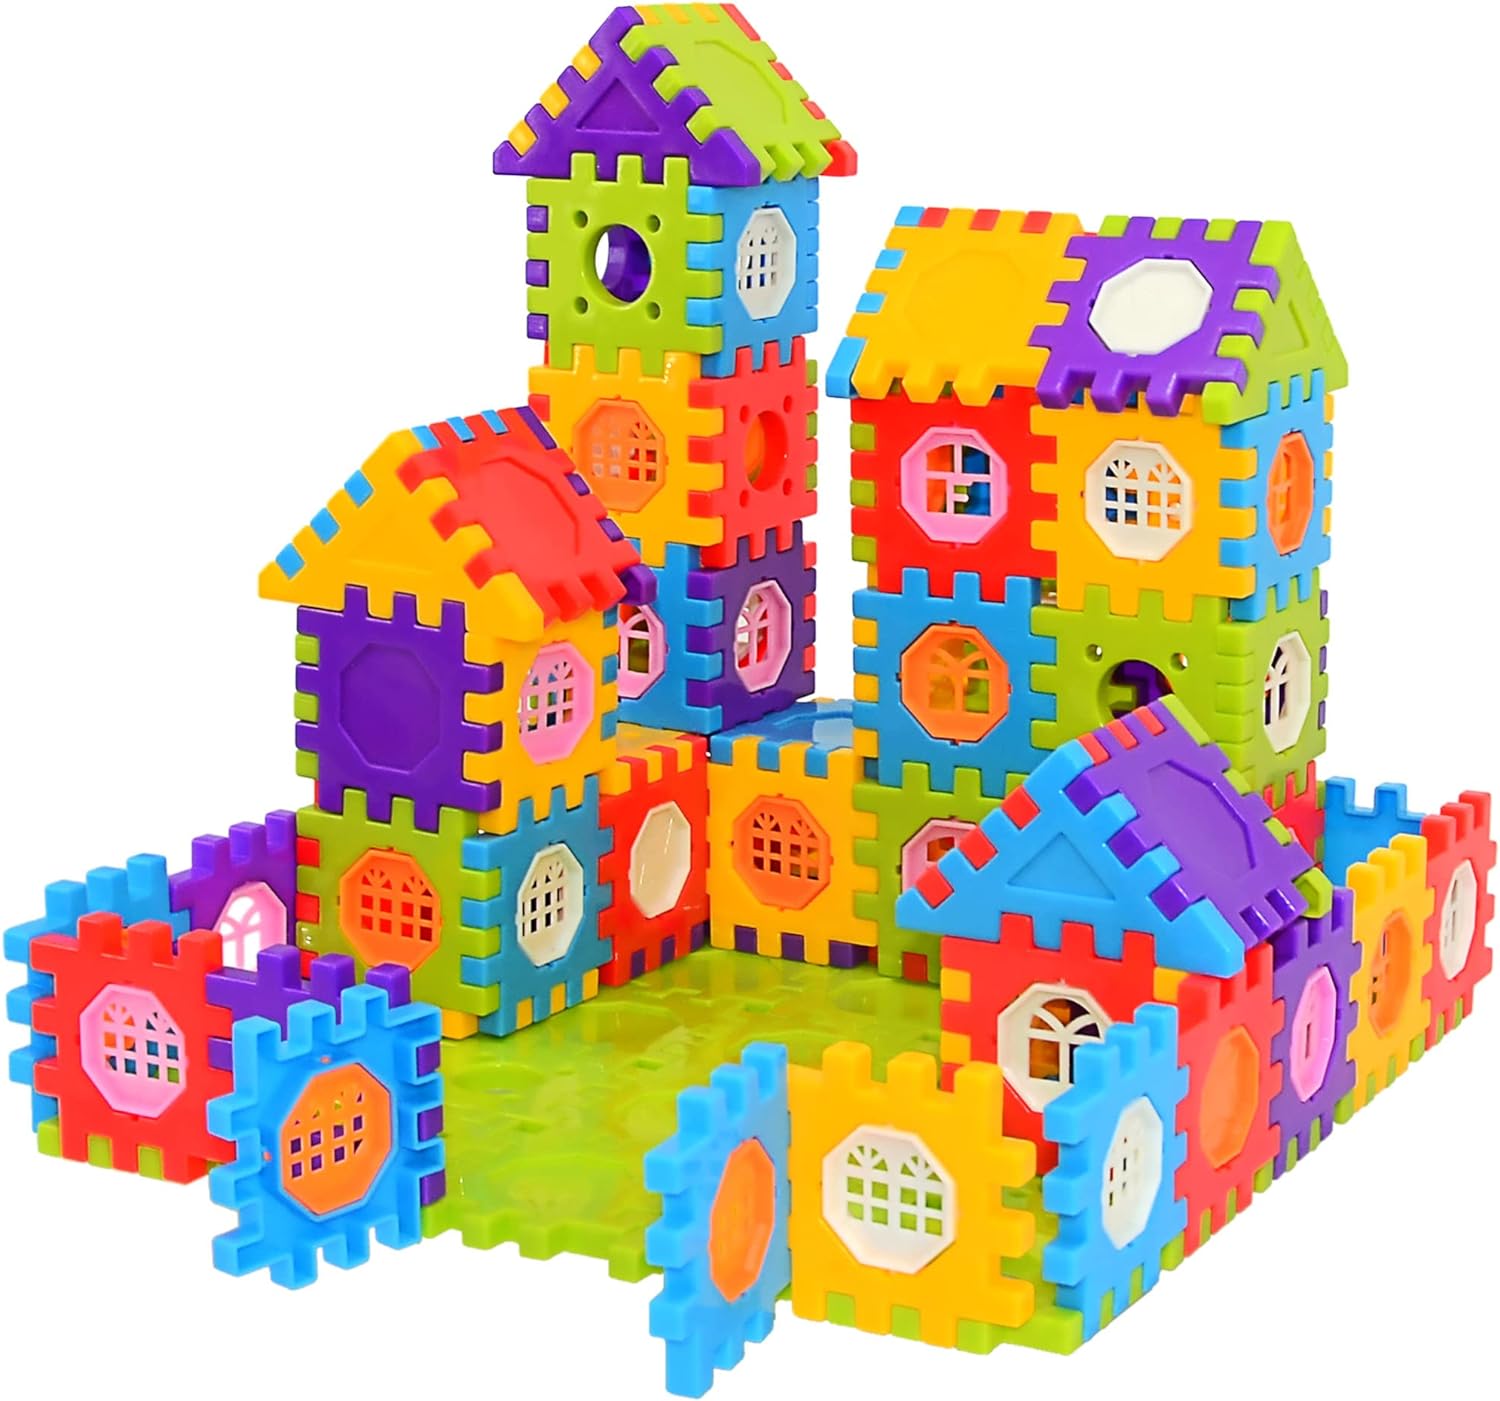 FUBAODA Building Blocks for Toddlers Kids 180 Pcs Toy Building Sets – STEM Building Toys –Interlocking Building Blocks for Toddlers and Kids